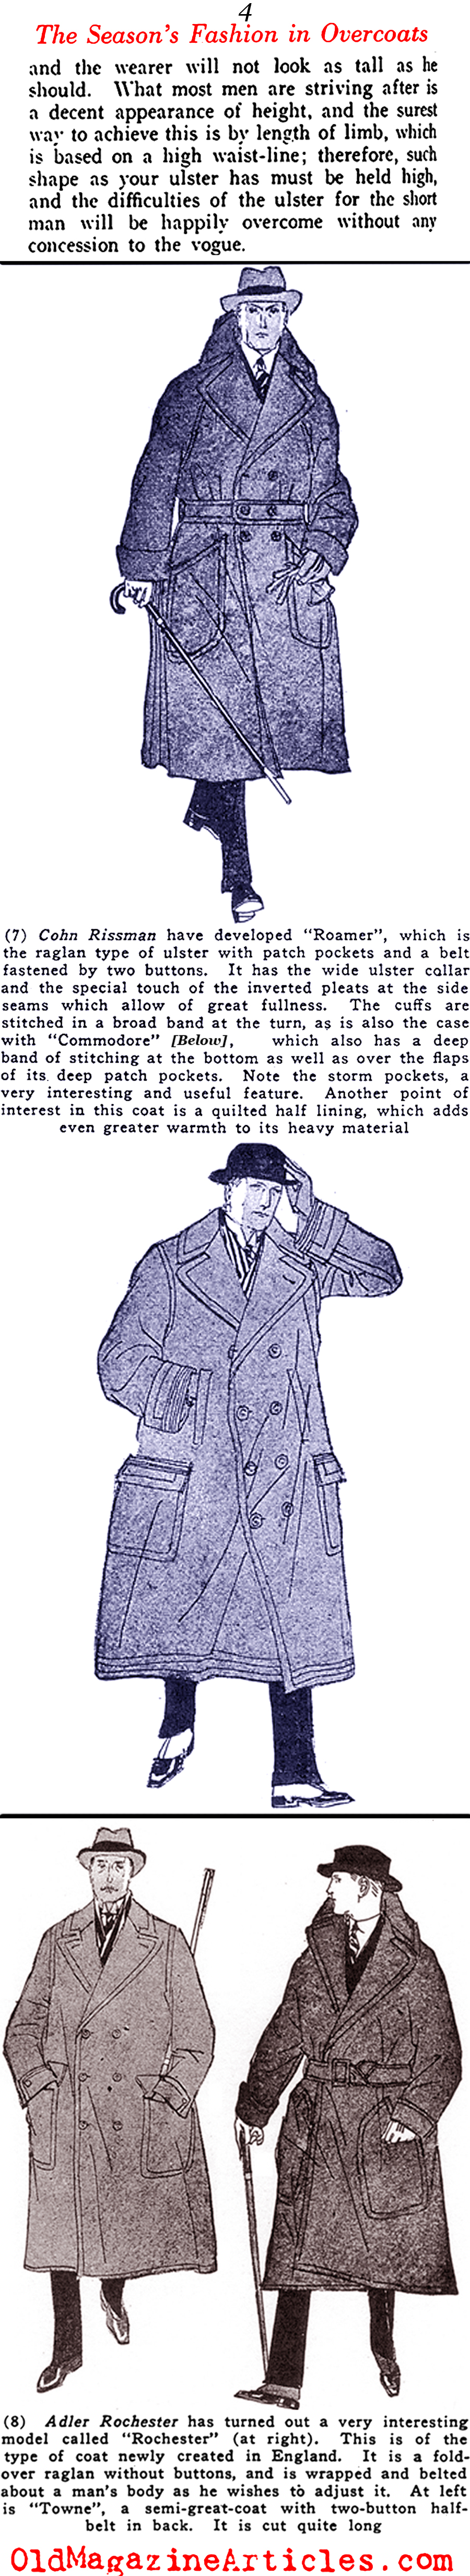 The Well Dressed Man in Winter   (Vanity Fair  Magazine, 1921)